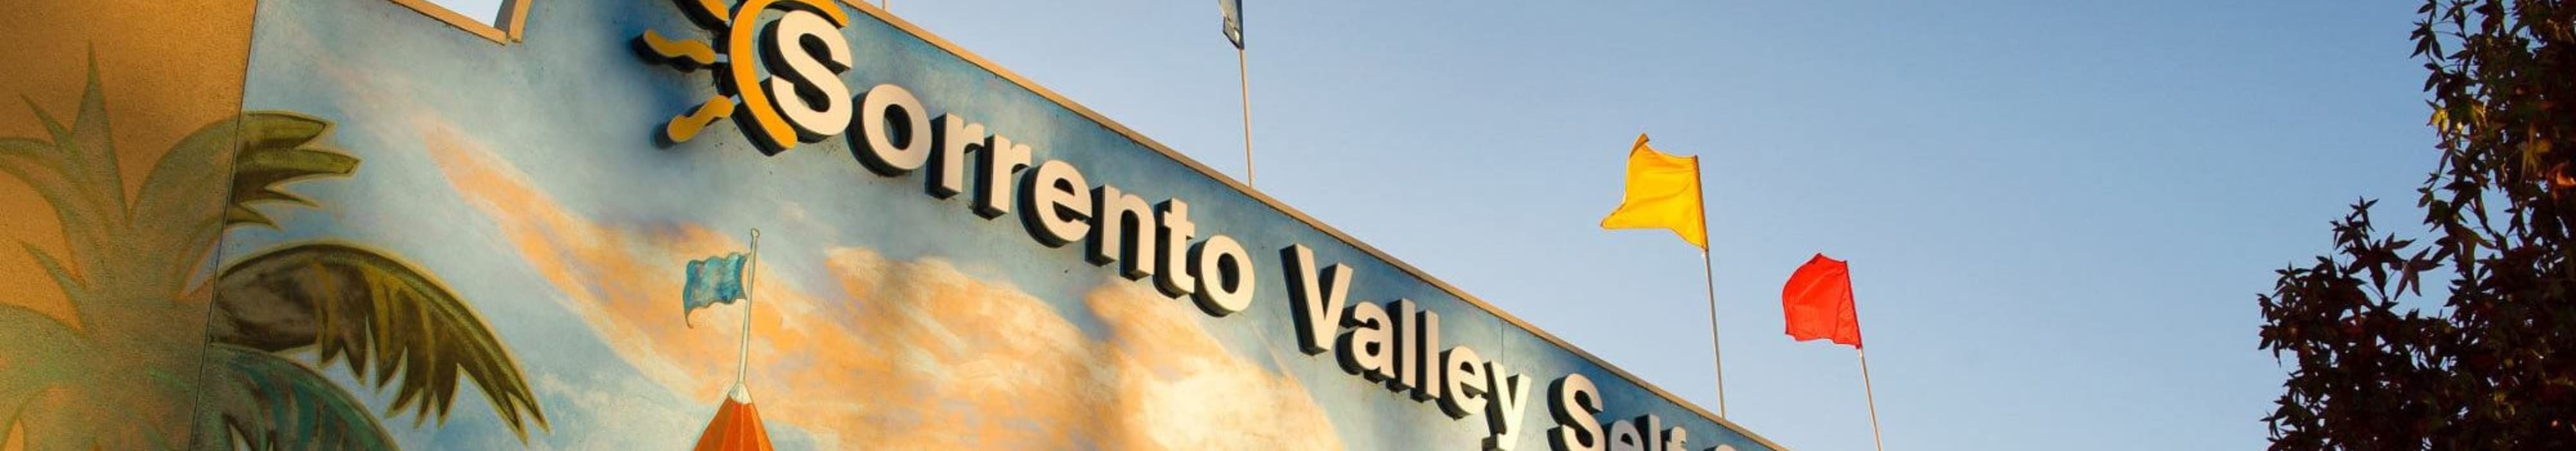 Branding on the exterior of Sorrento Valley Self Storage in San Diego, California